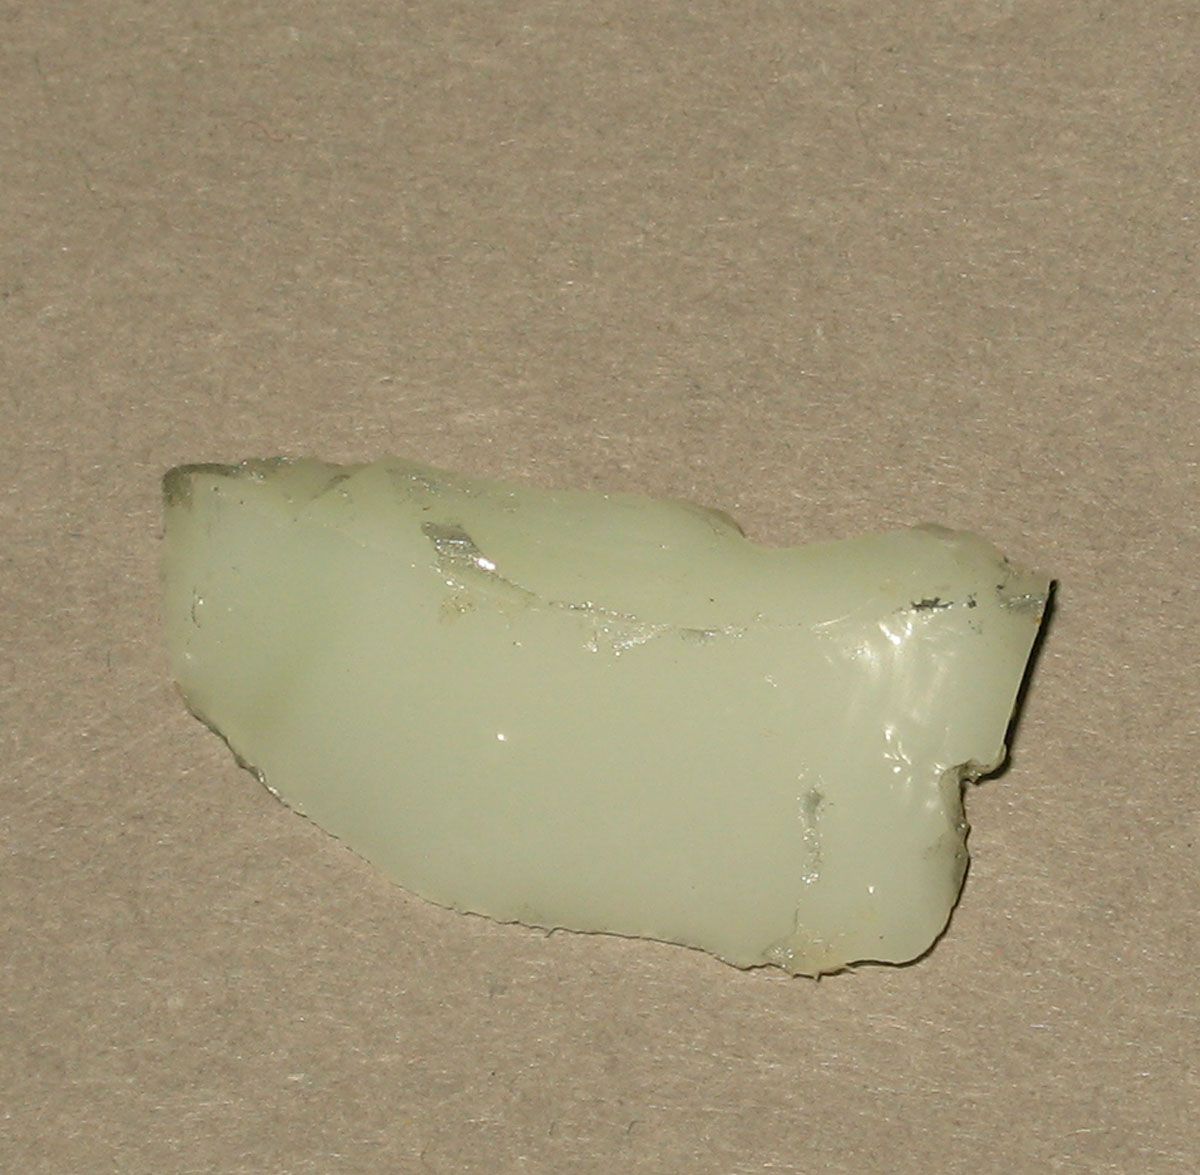 1971.0024.067 Glass fragment